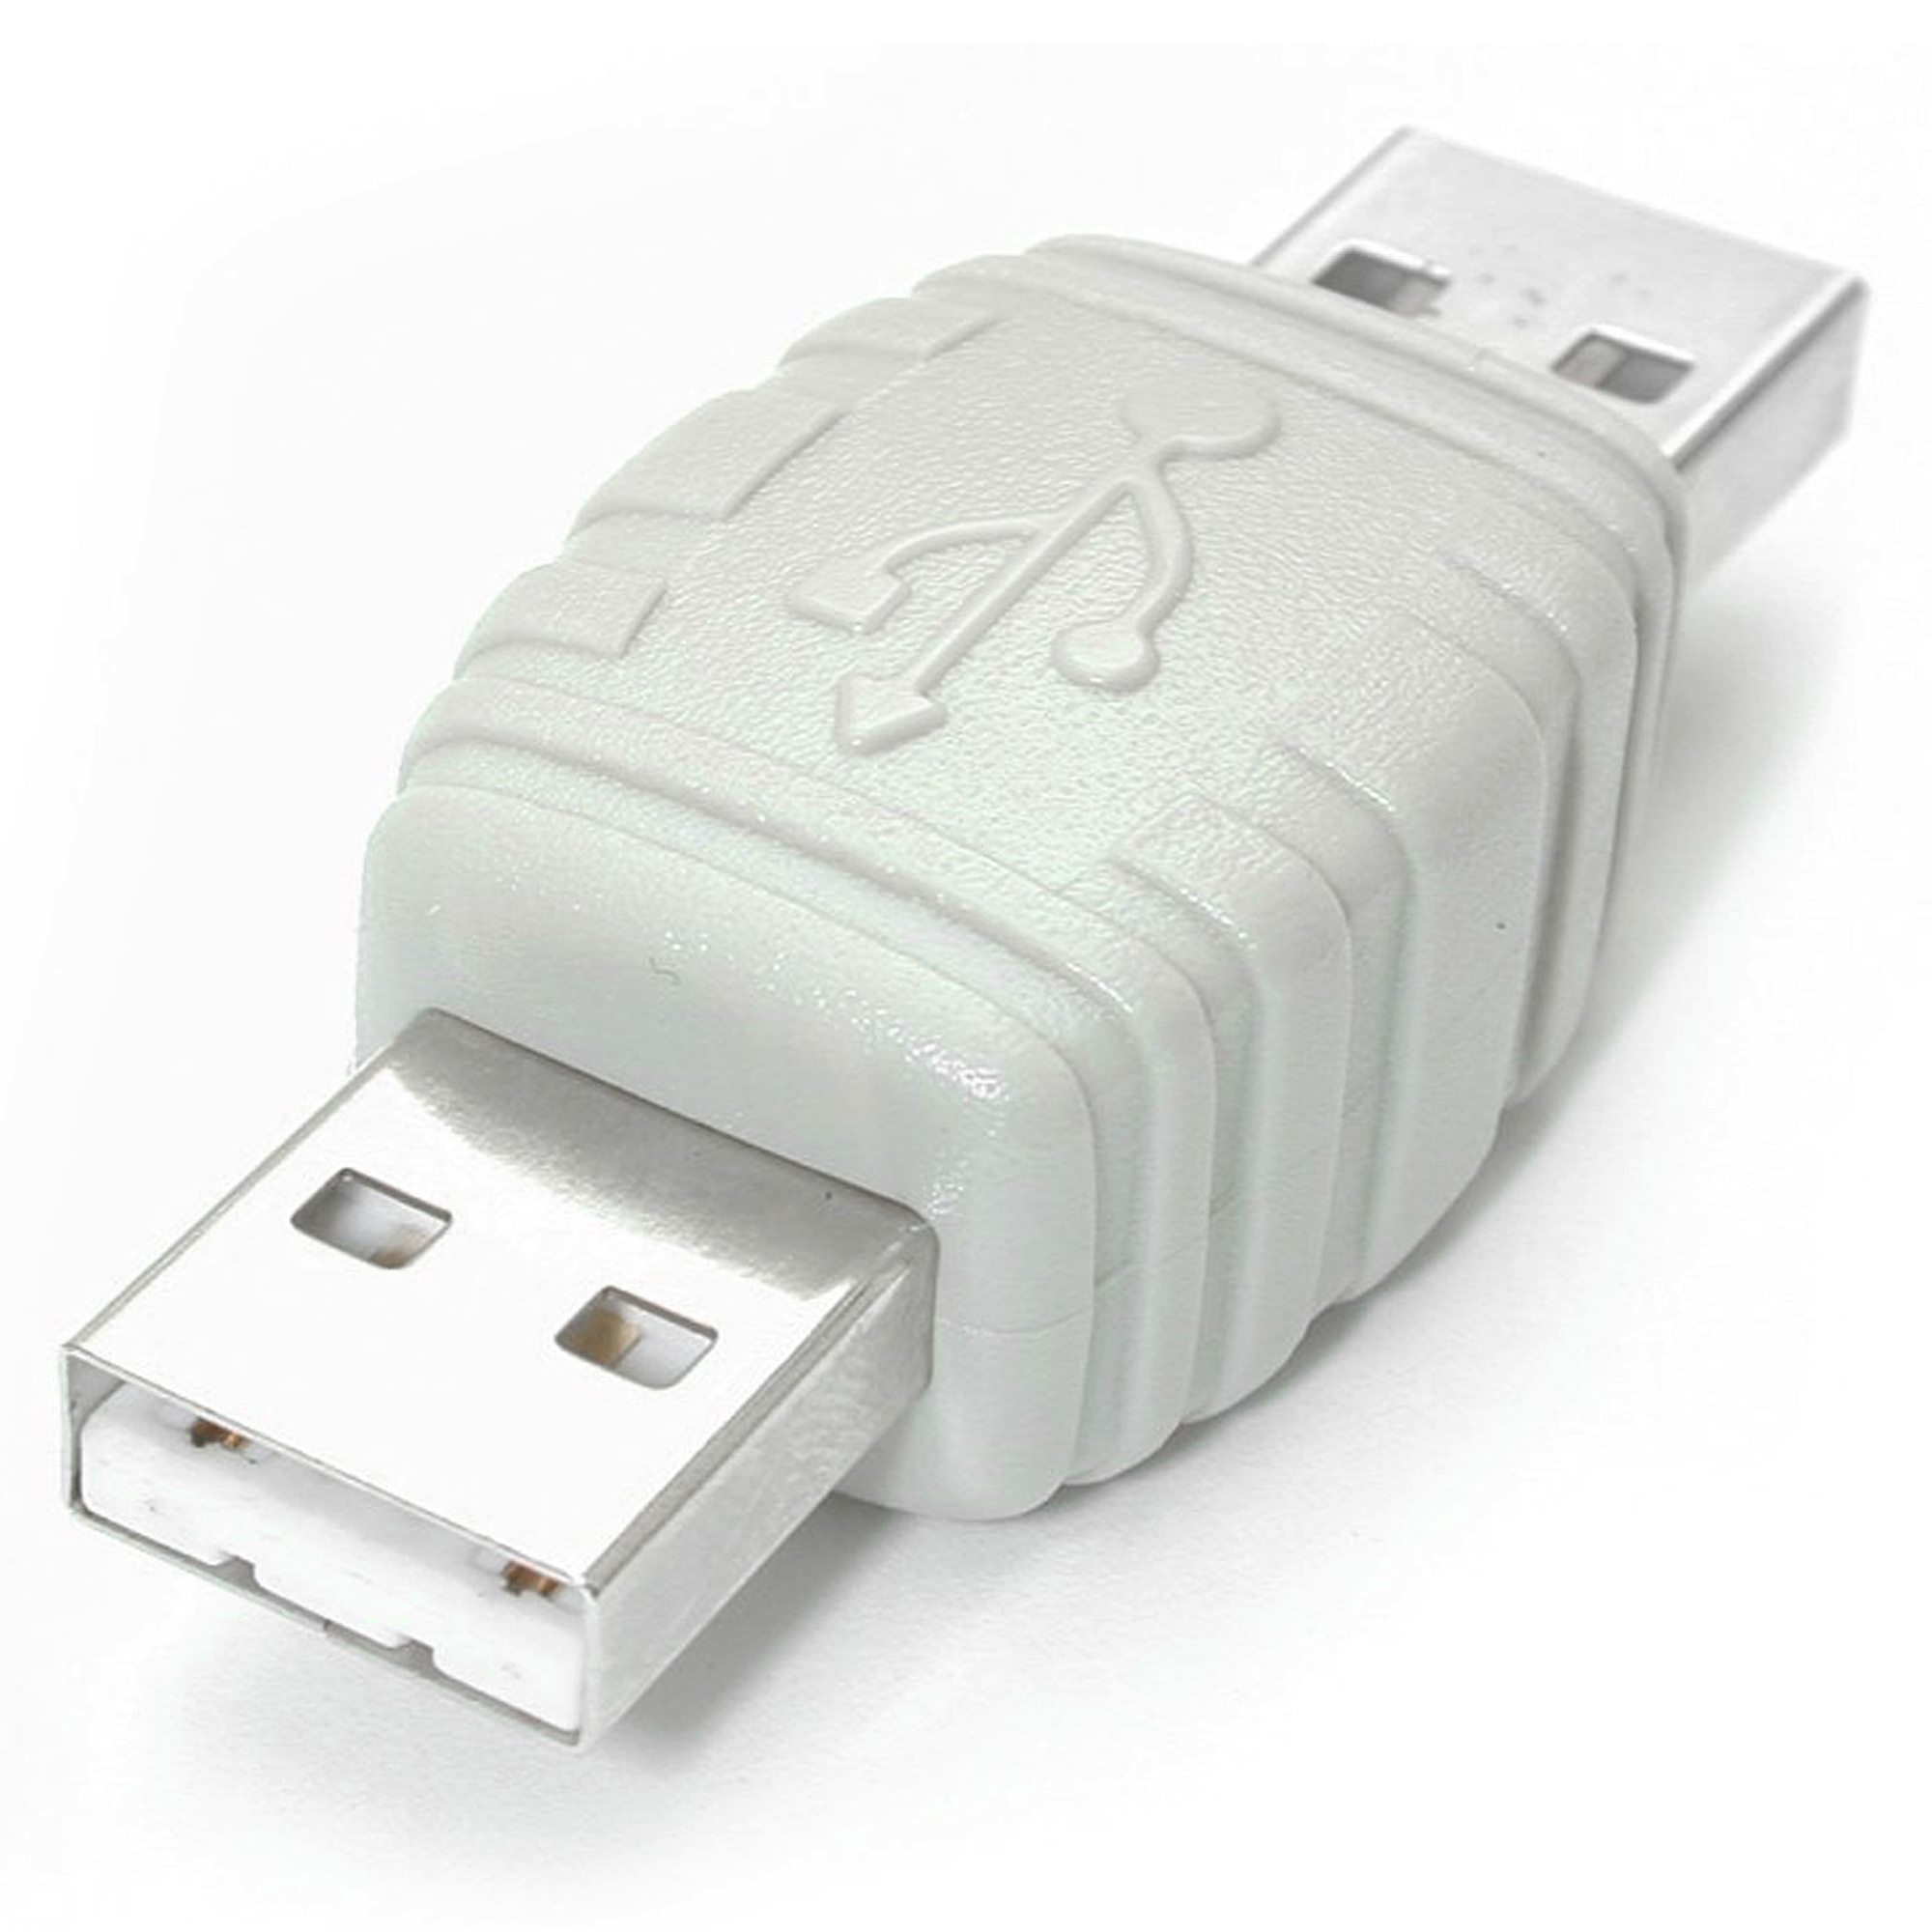 Usb адаптер tl. Переходник юсб множитель. Переходник USB 2.0 Type a male to Type c. STARTECH Micro USB to Mini USB Adapter m/f. Jet-a адаптер USB2.0.